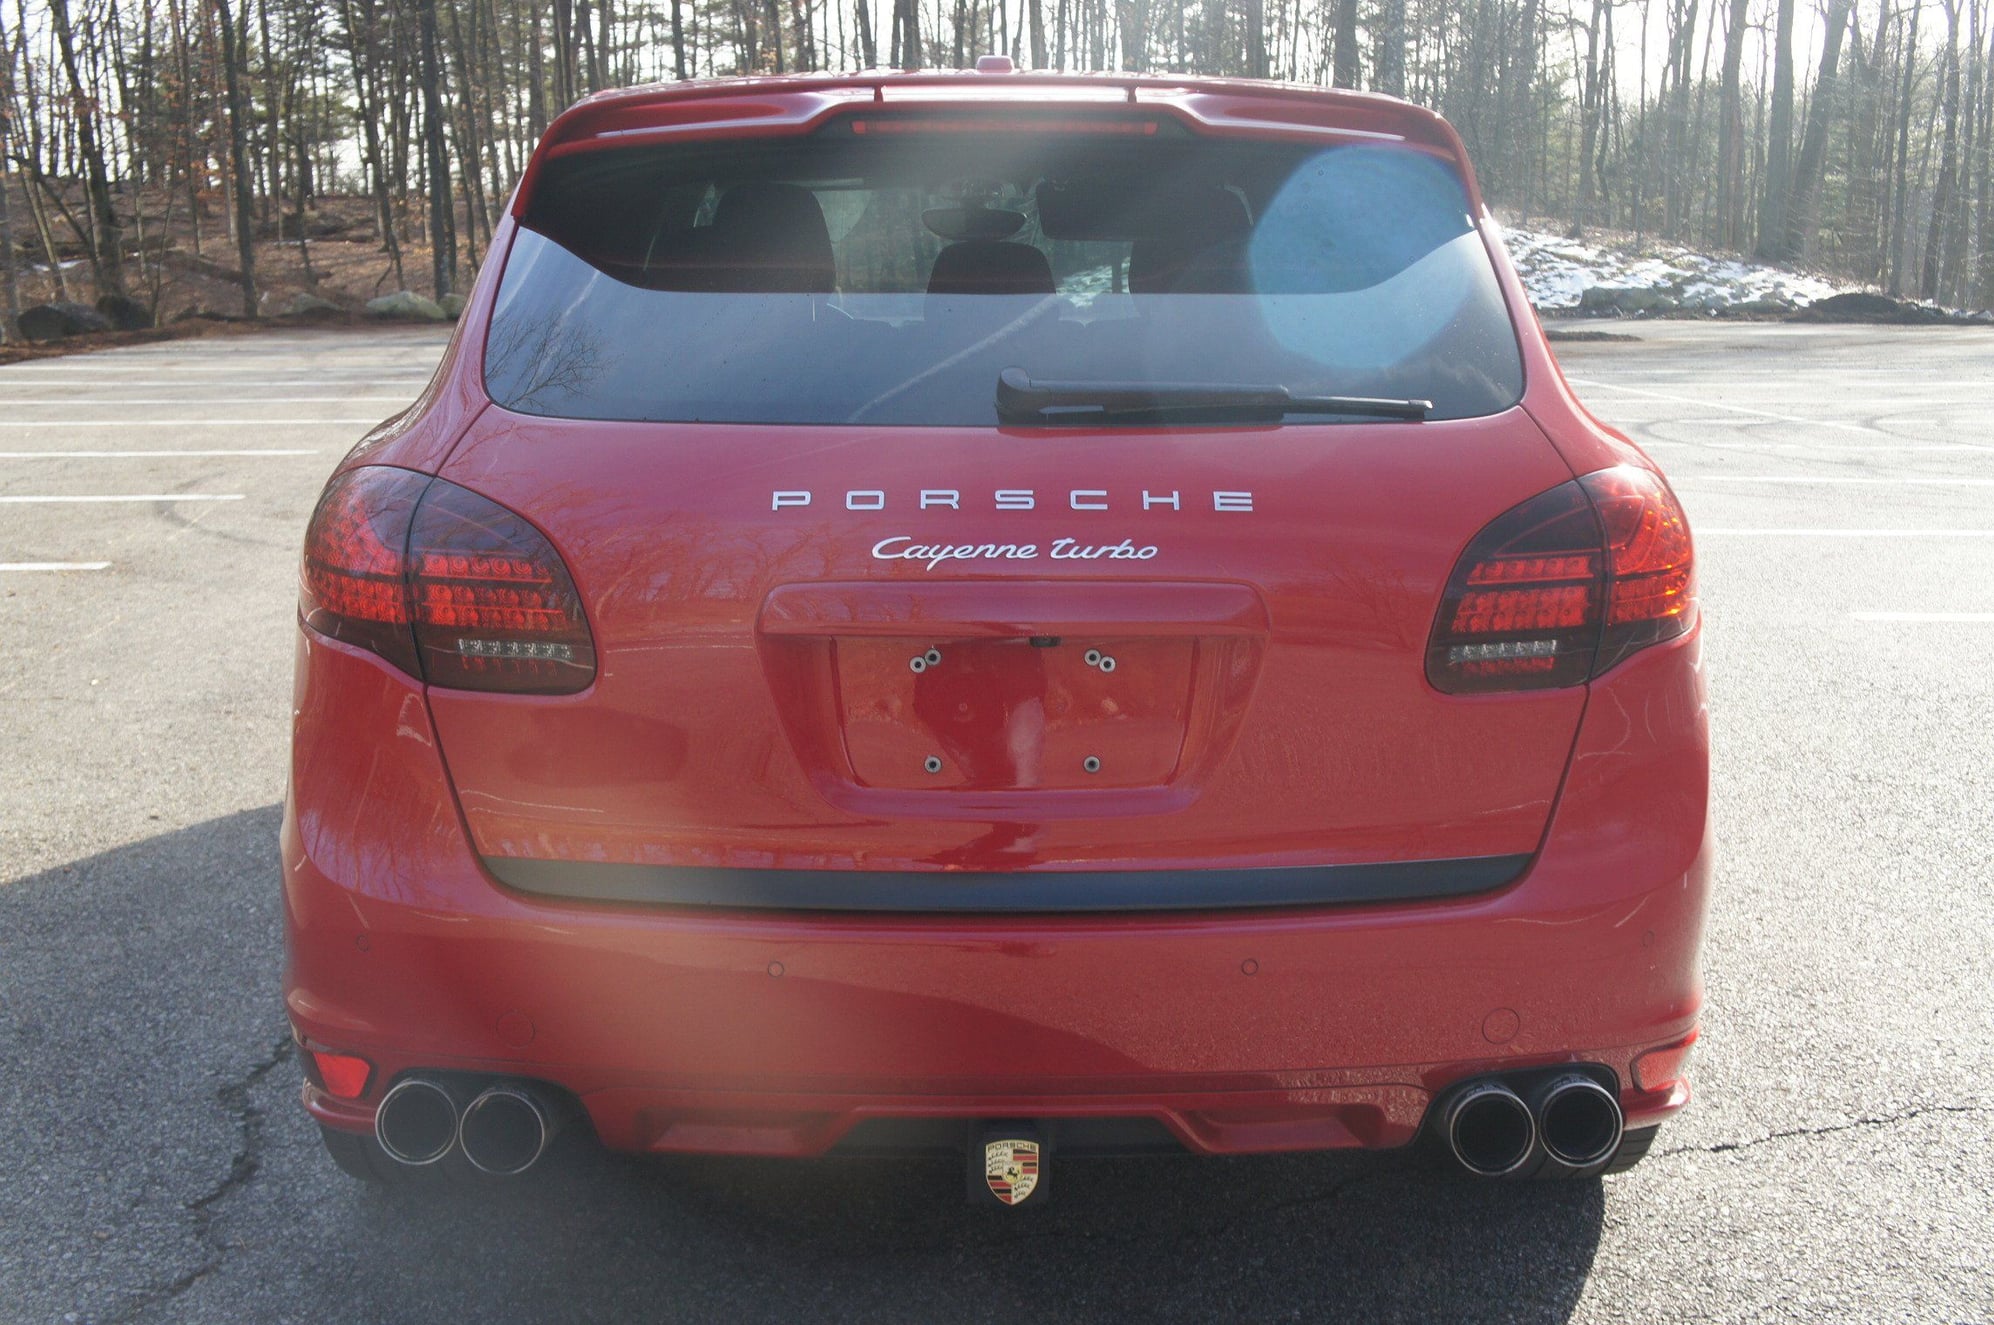 2014 Porsche Cayenne - 2014 PORSCHE CAYENNE TURBO SportDesign Package LOTS MORE $137k MSRP - Used - Parsippany, NJ 7054, United States